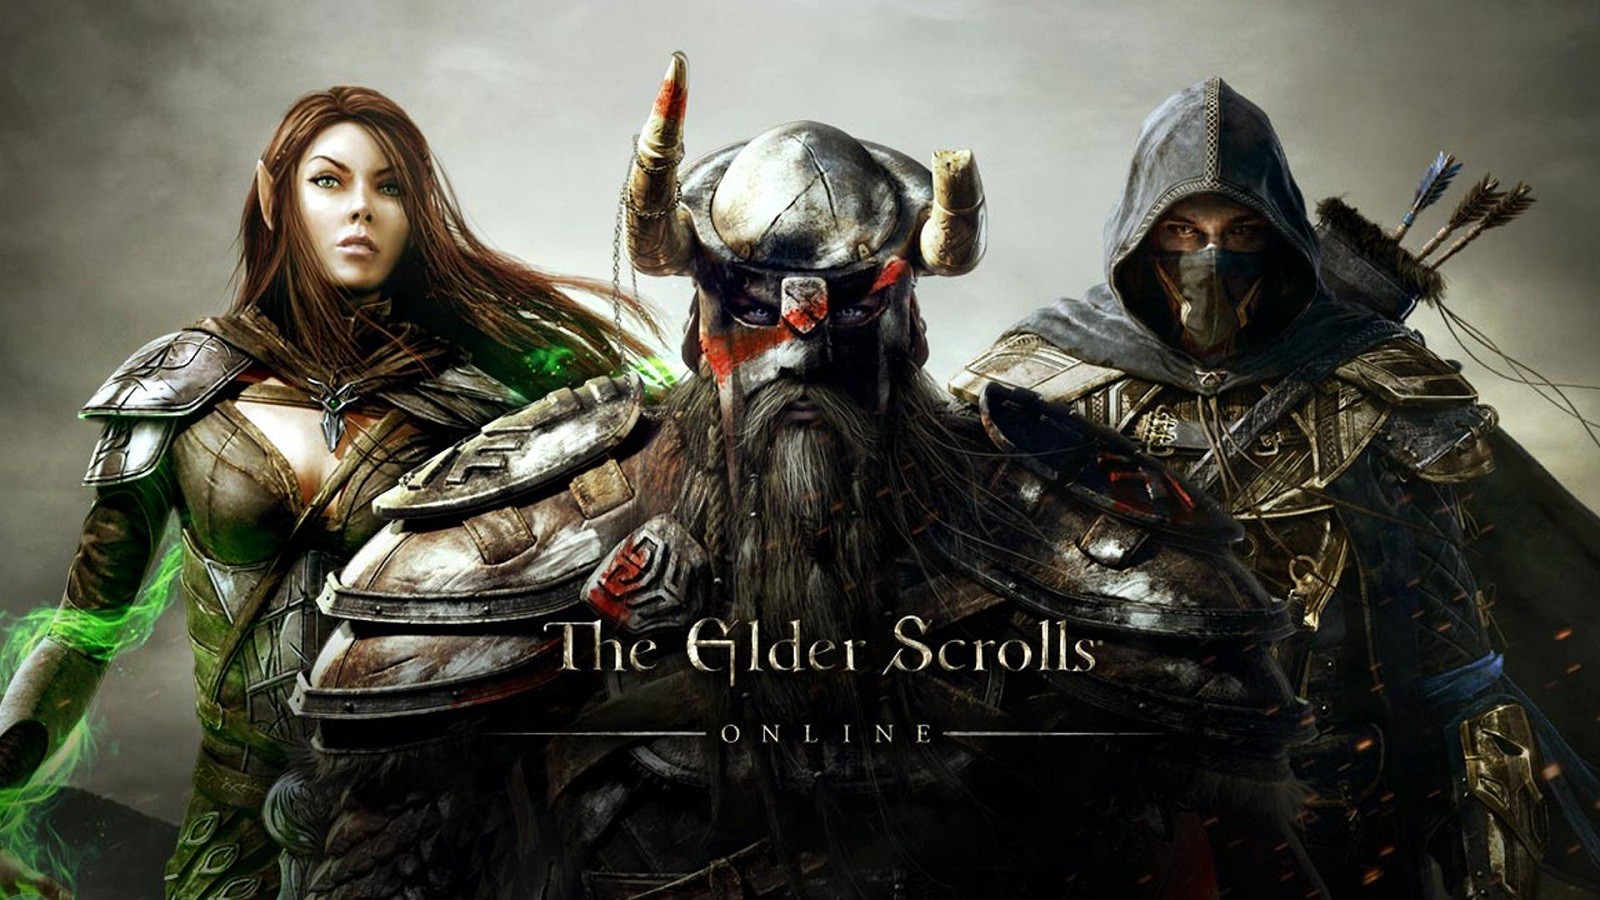 The Elder Scrolls Online Wallpaper